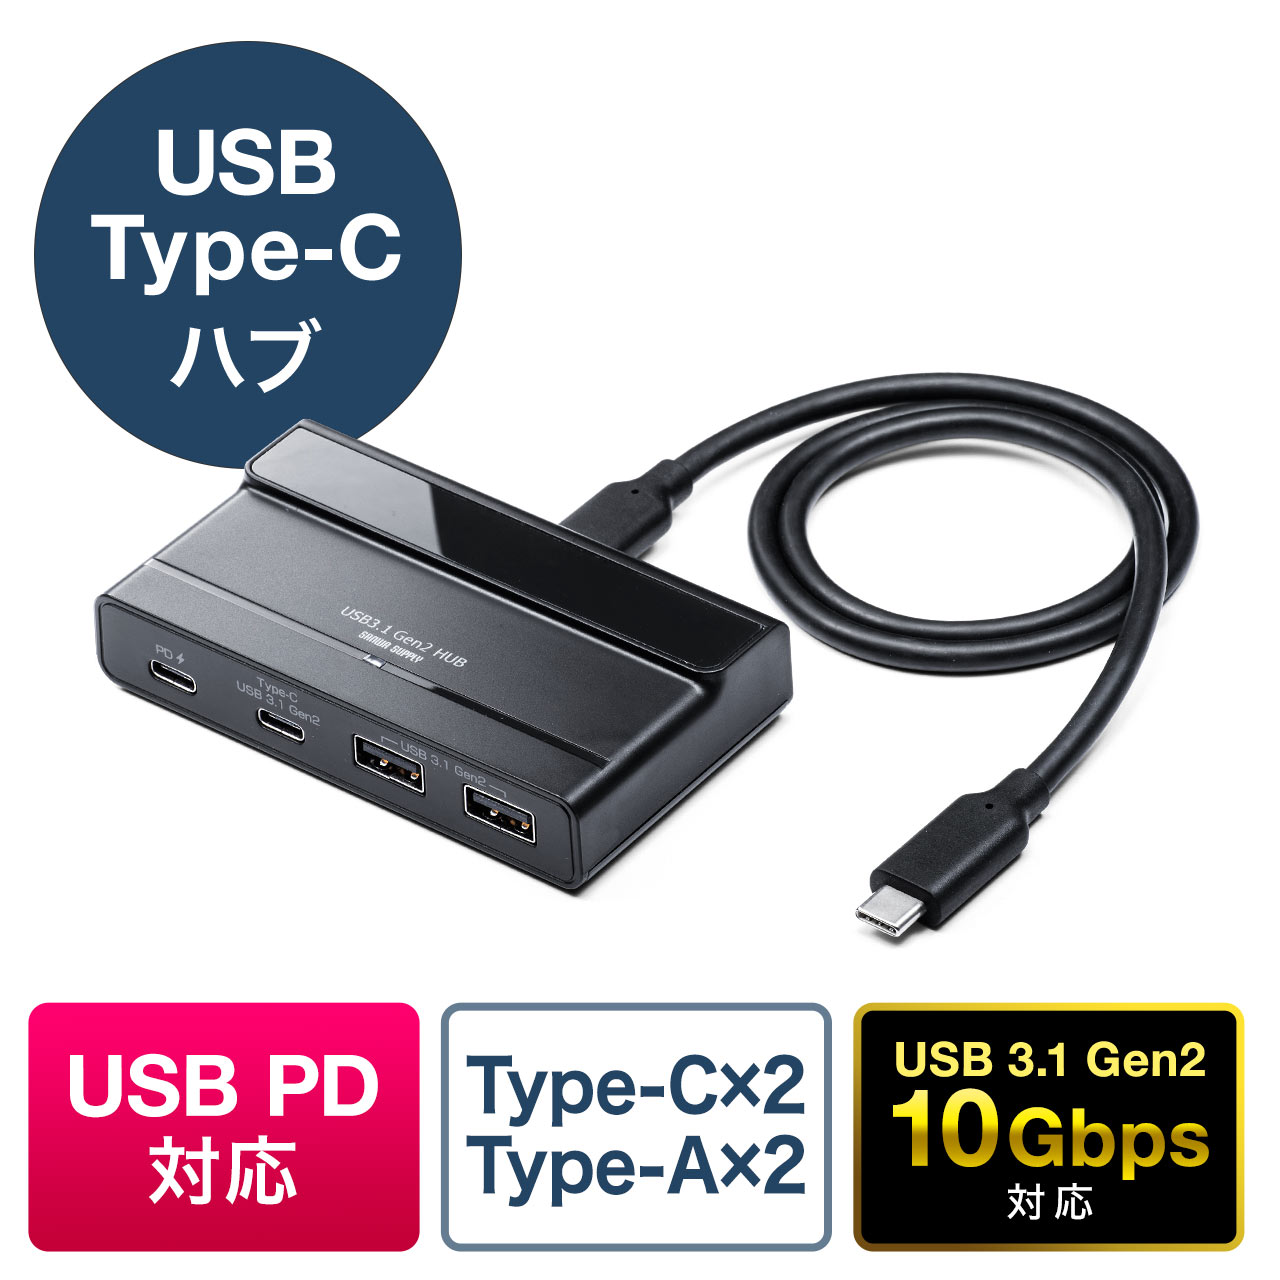 USB Type-Cnu USB3.1 Gen2 USB Type-C USB A 4|[g USB PDΉ Ztp[ ACA_v^t ubN 400-HUB075BK